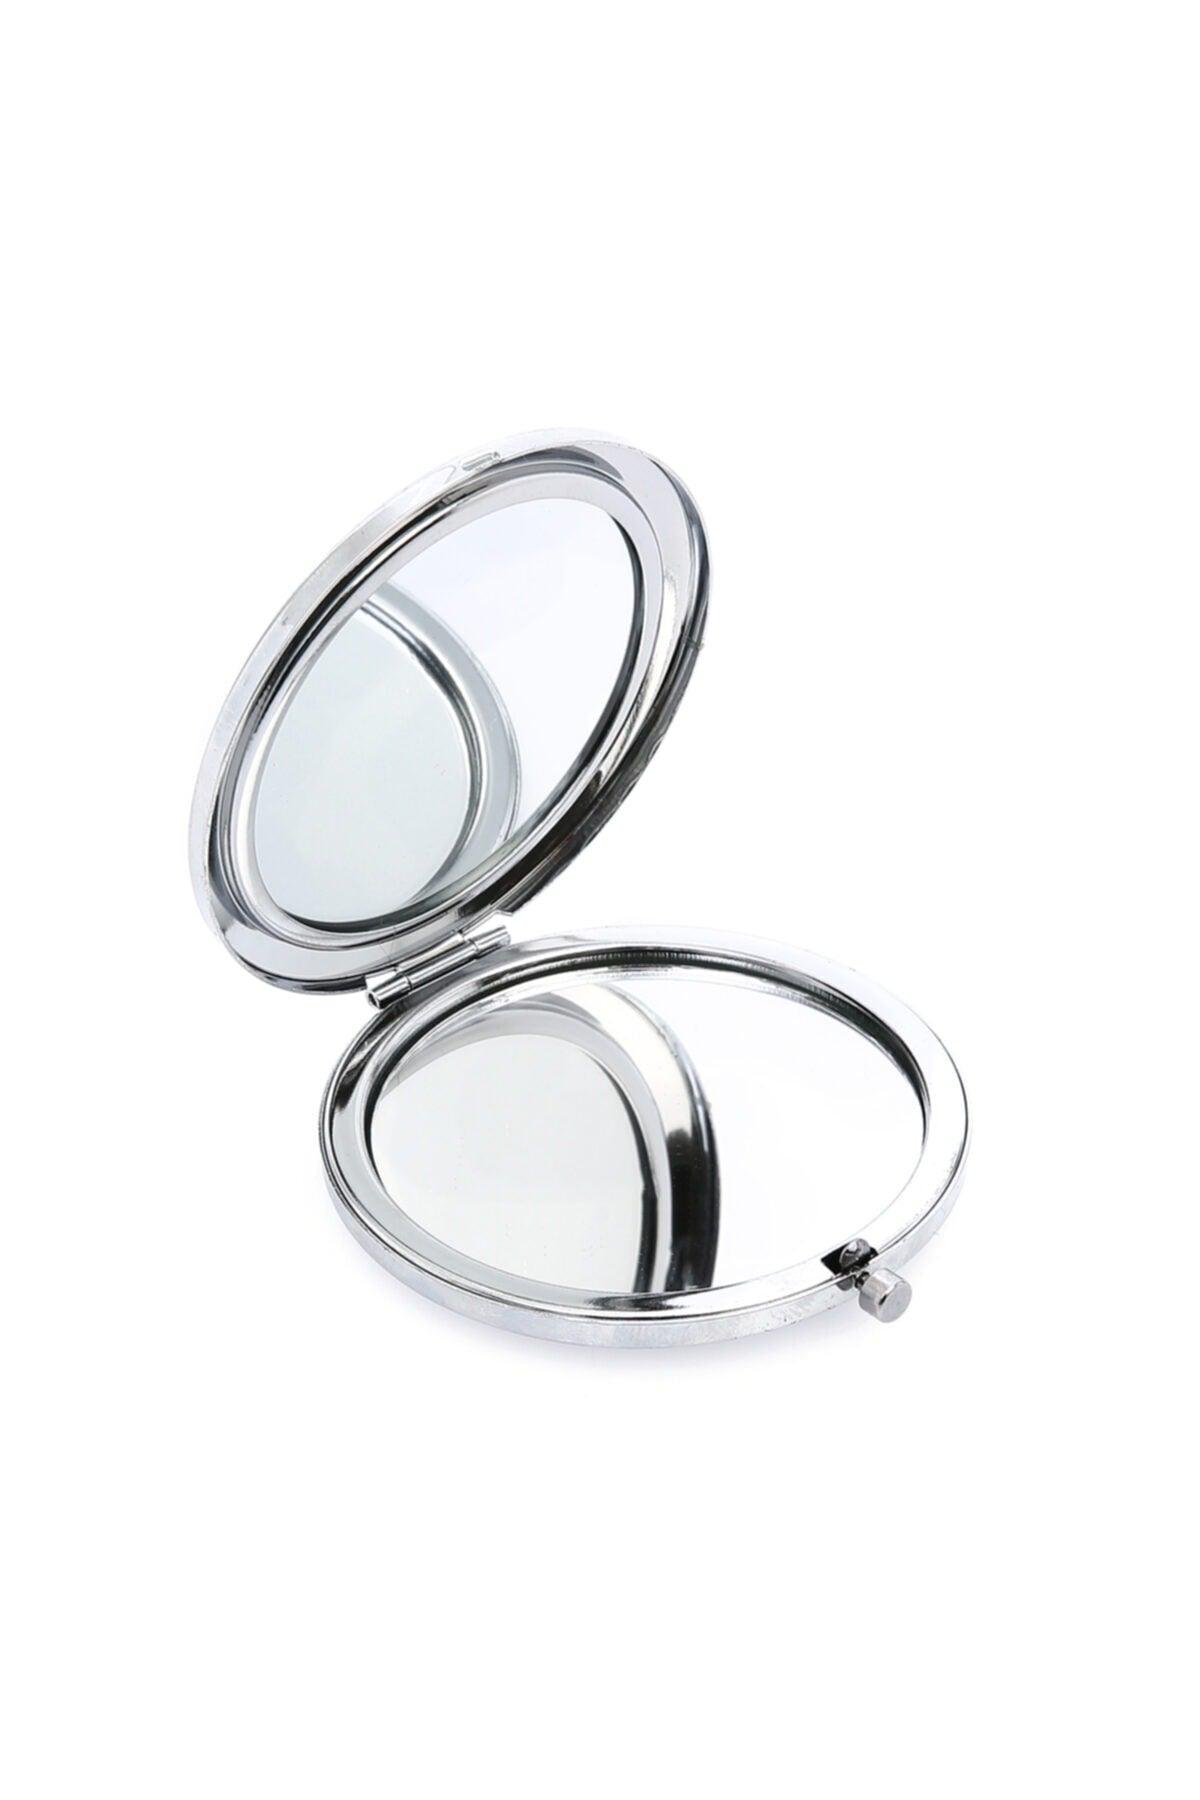 Pocket Bag Mirror Makeup Mirror With Cover Silver - Swordslife